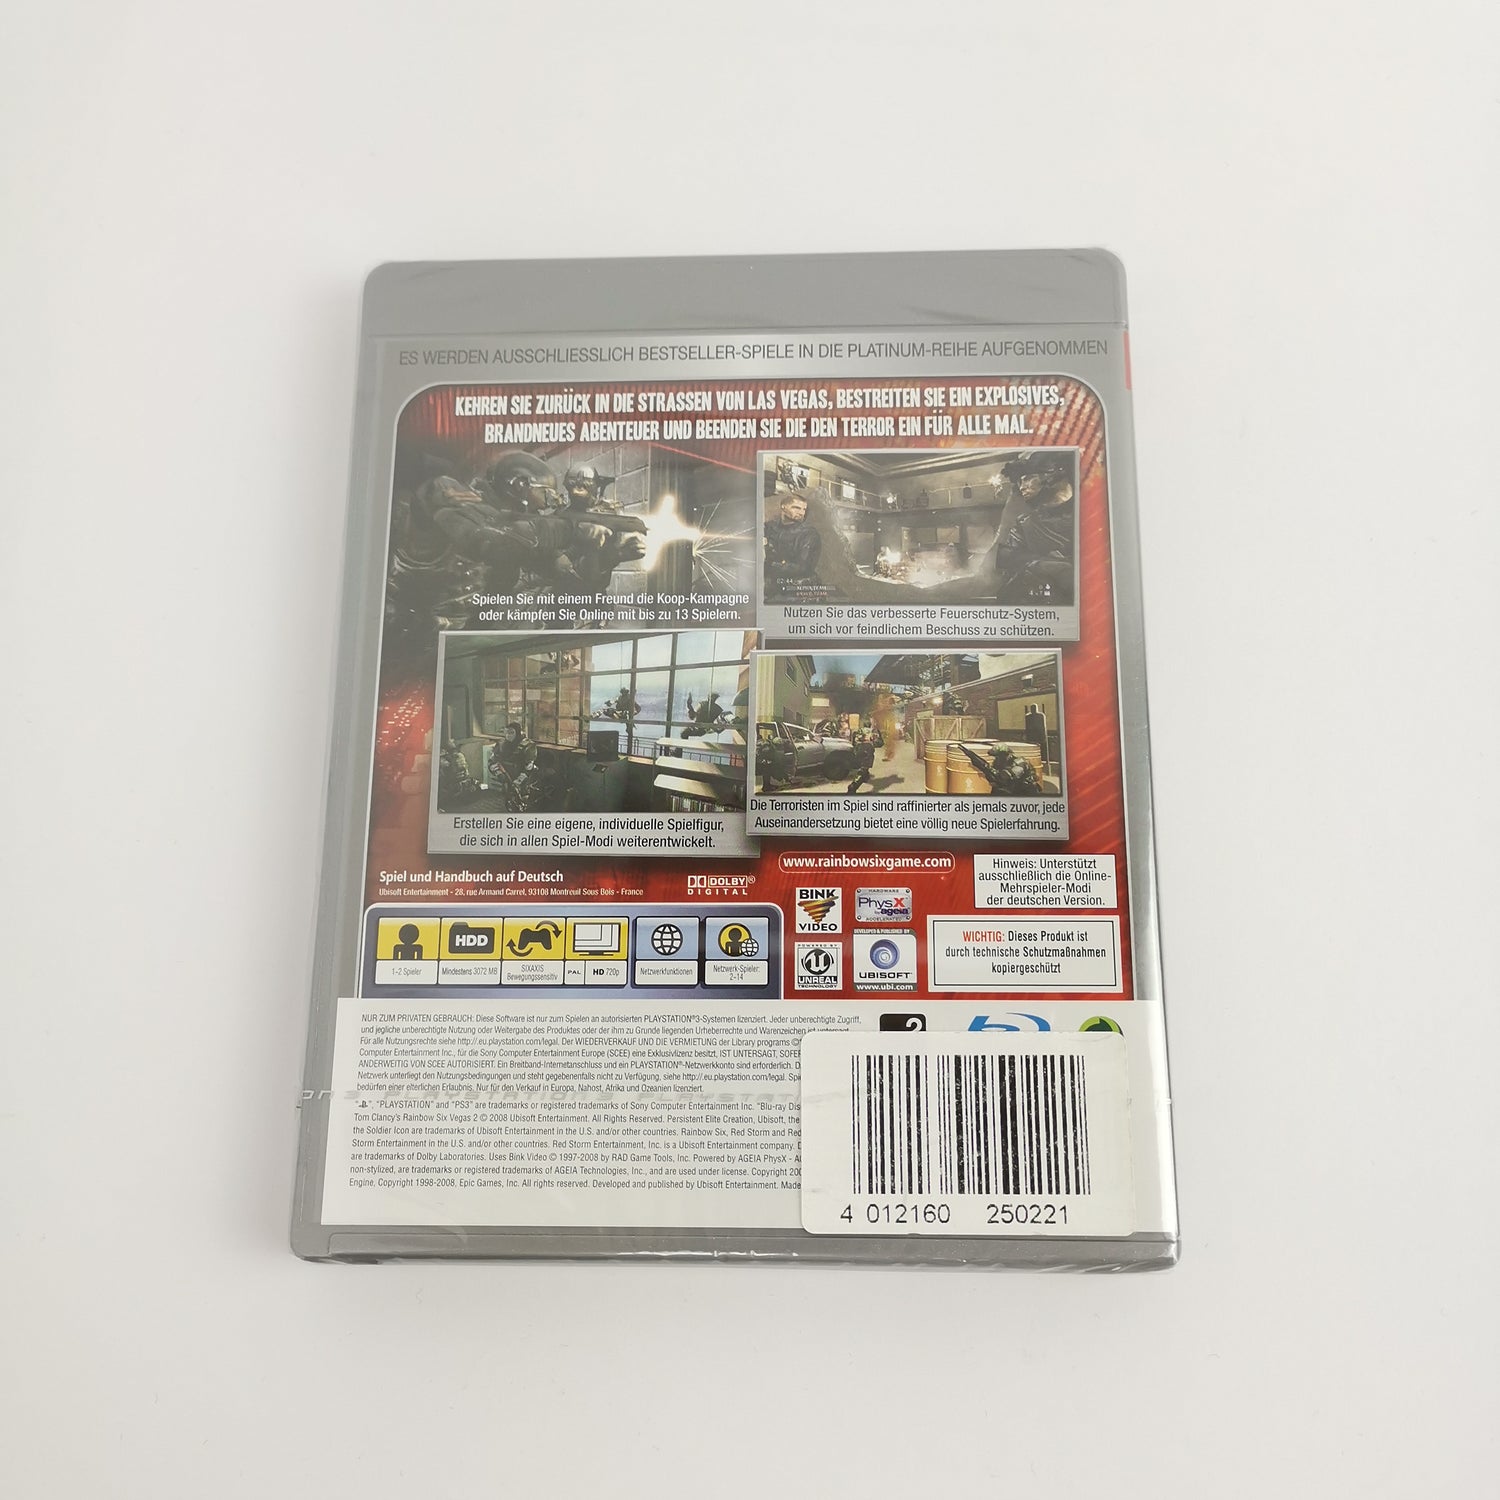 Sony Playstation 3 Spiel : Tom Clancys Rainbow Six Vegas 2 | Platinum USK18 NEU